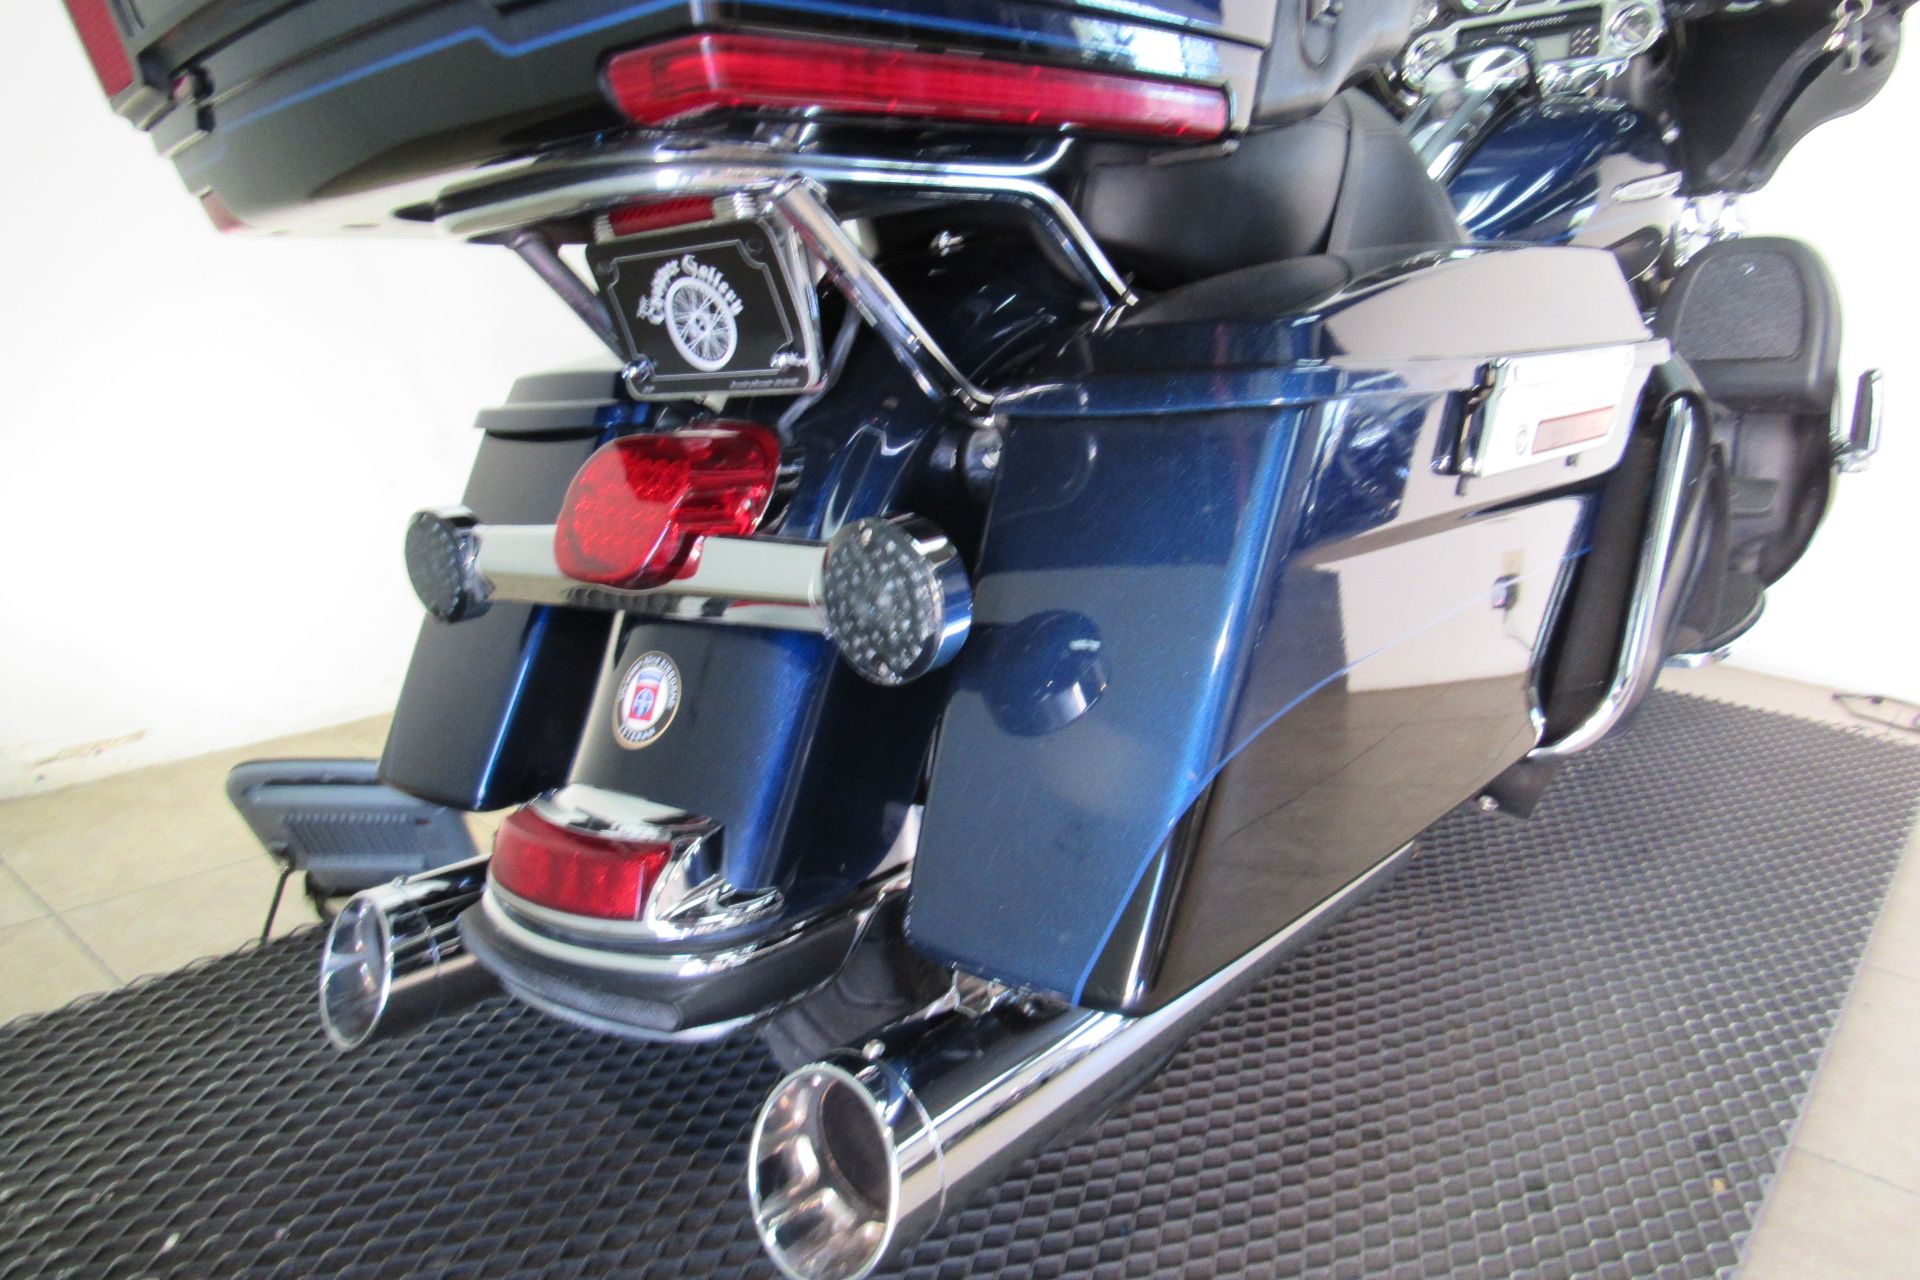 2012 Harley-Davidson Electra Glide® Ultra Limited in Temecula, California - Photo 25